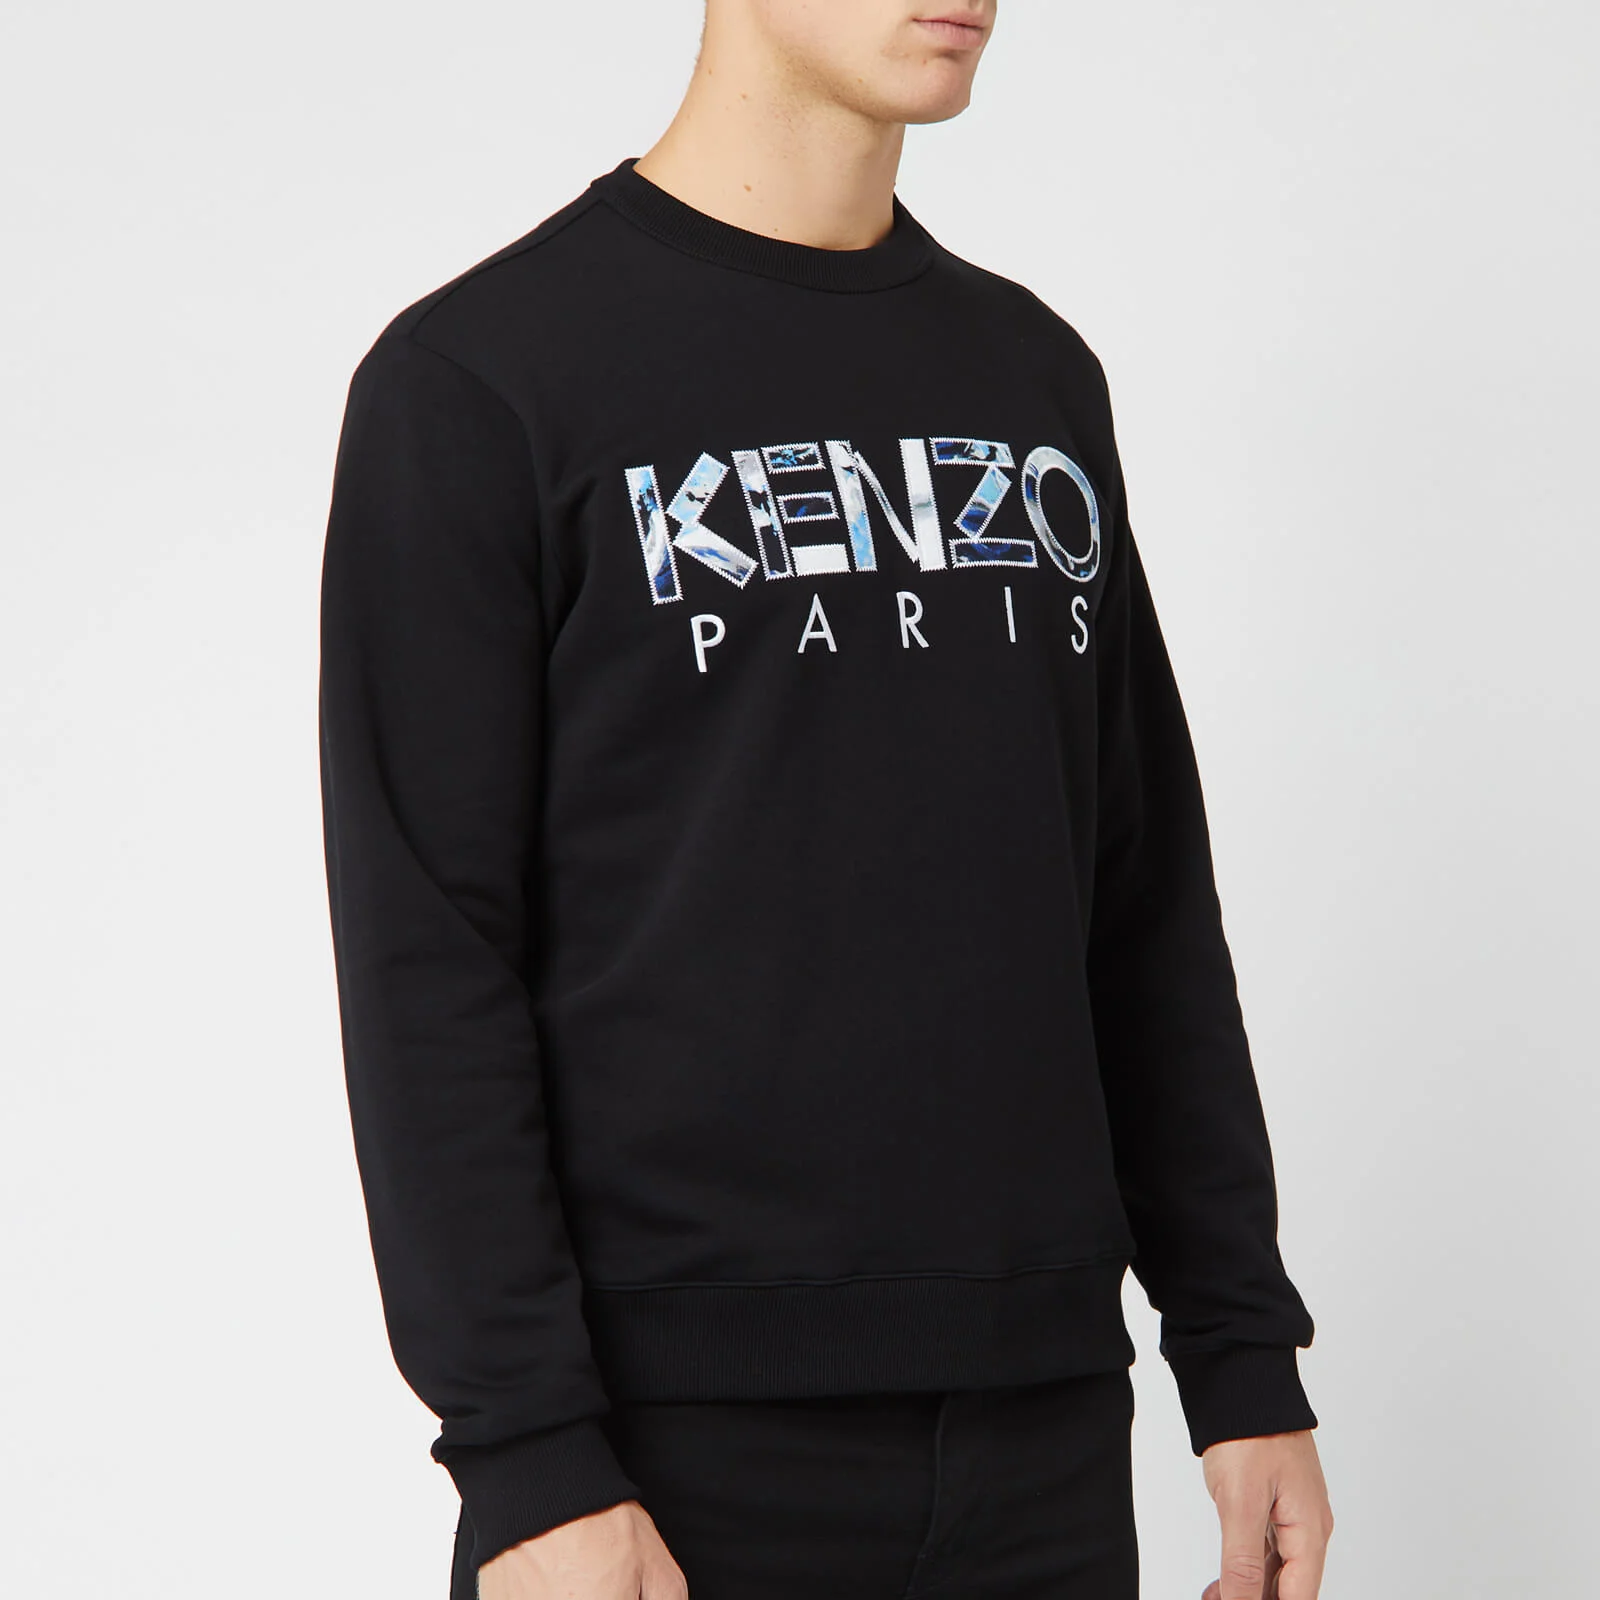 KENZO Men's Classic Kenzo Paris Sweatshirt - Black Image 1